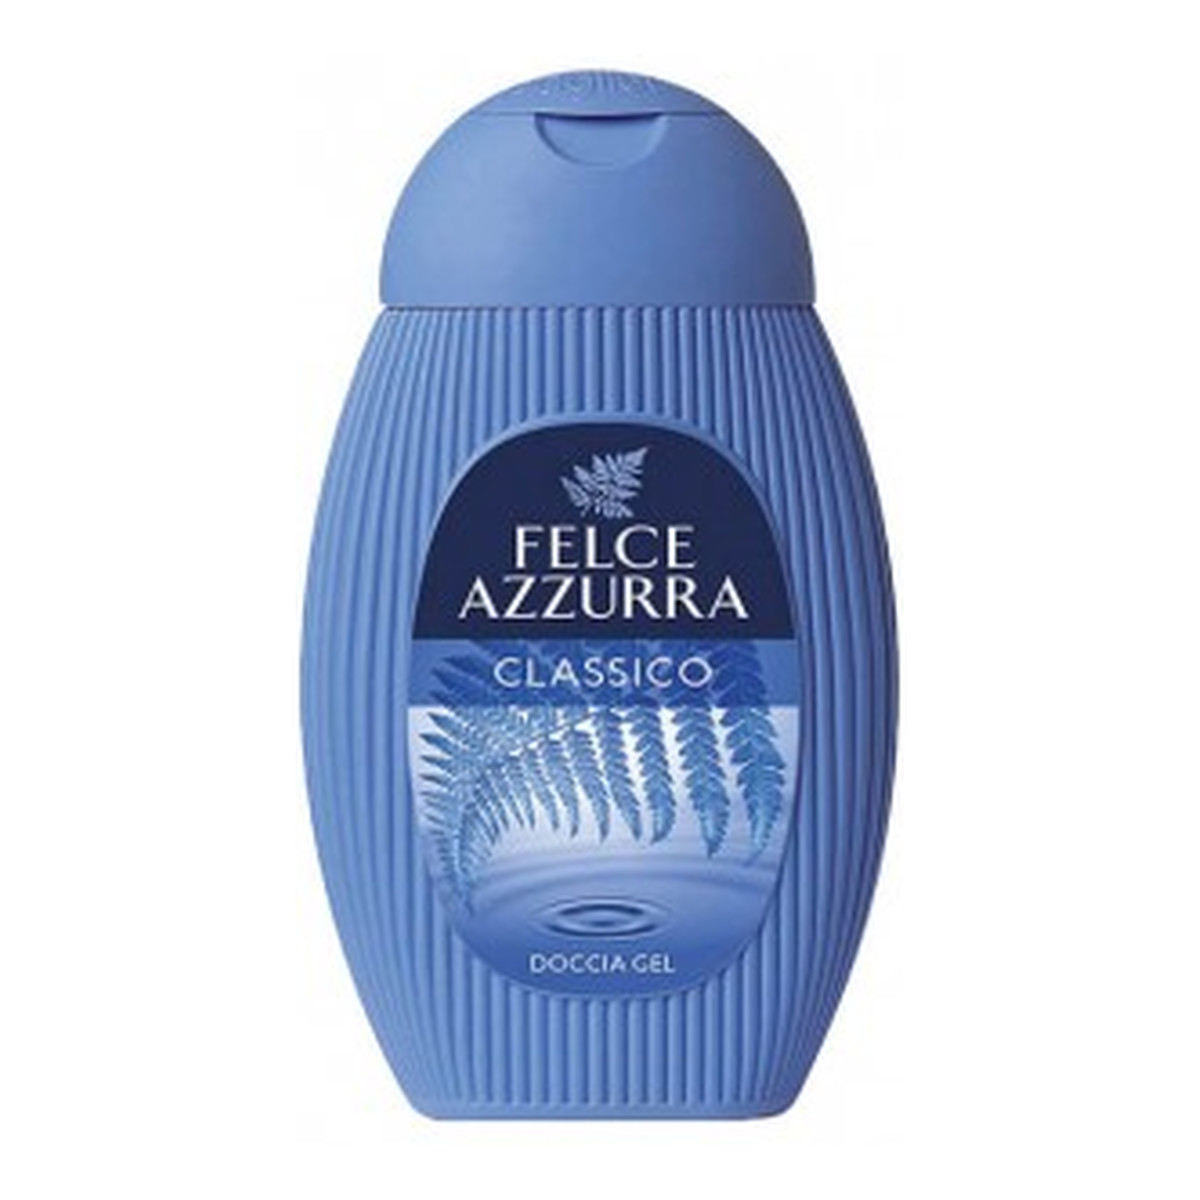 Felce Azzurra Classico Żel pod prysznic Original 250ml